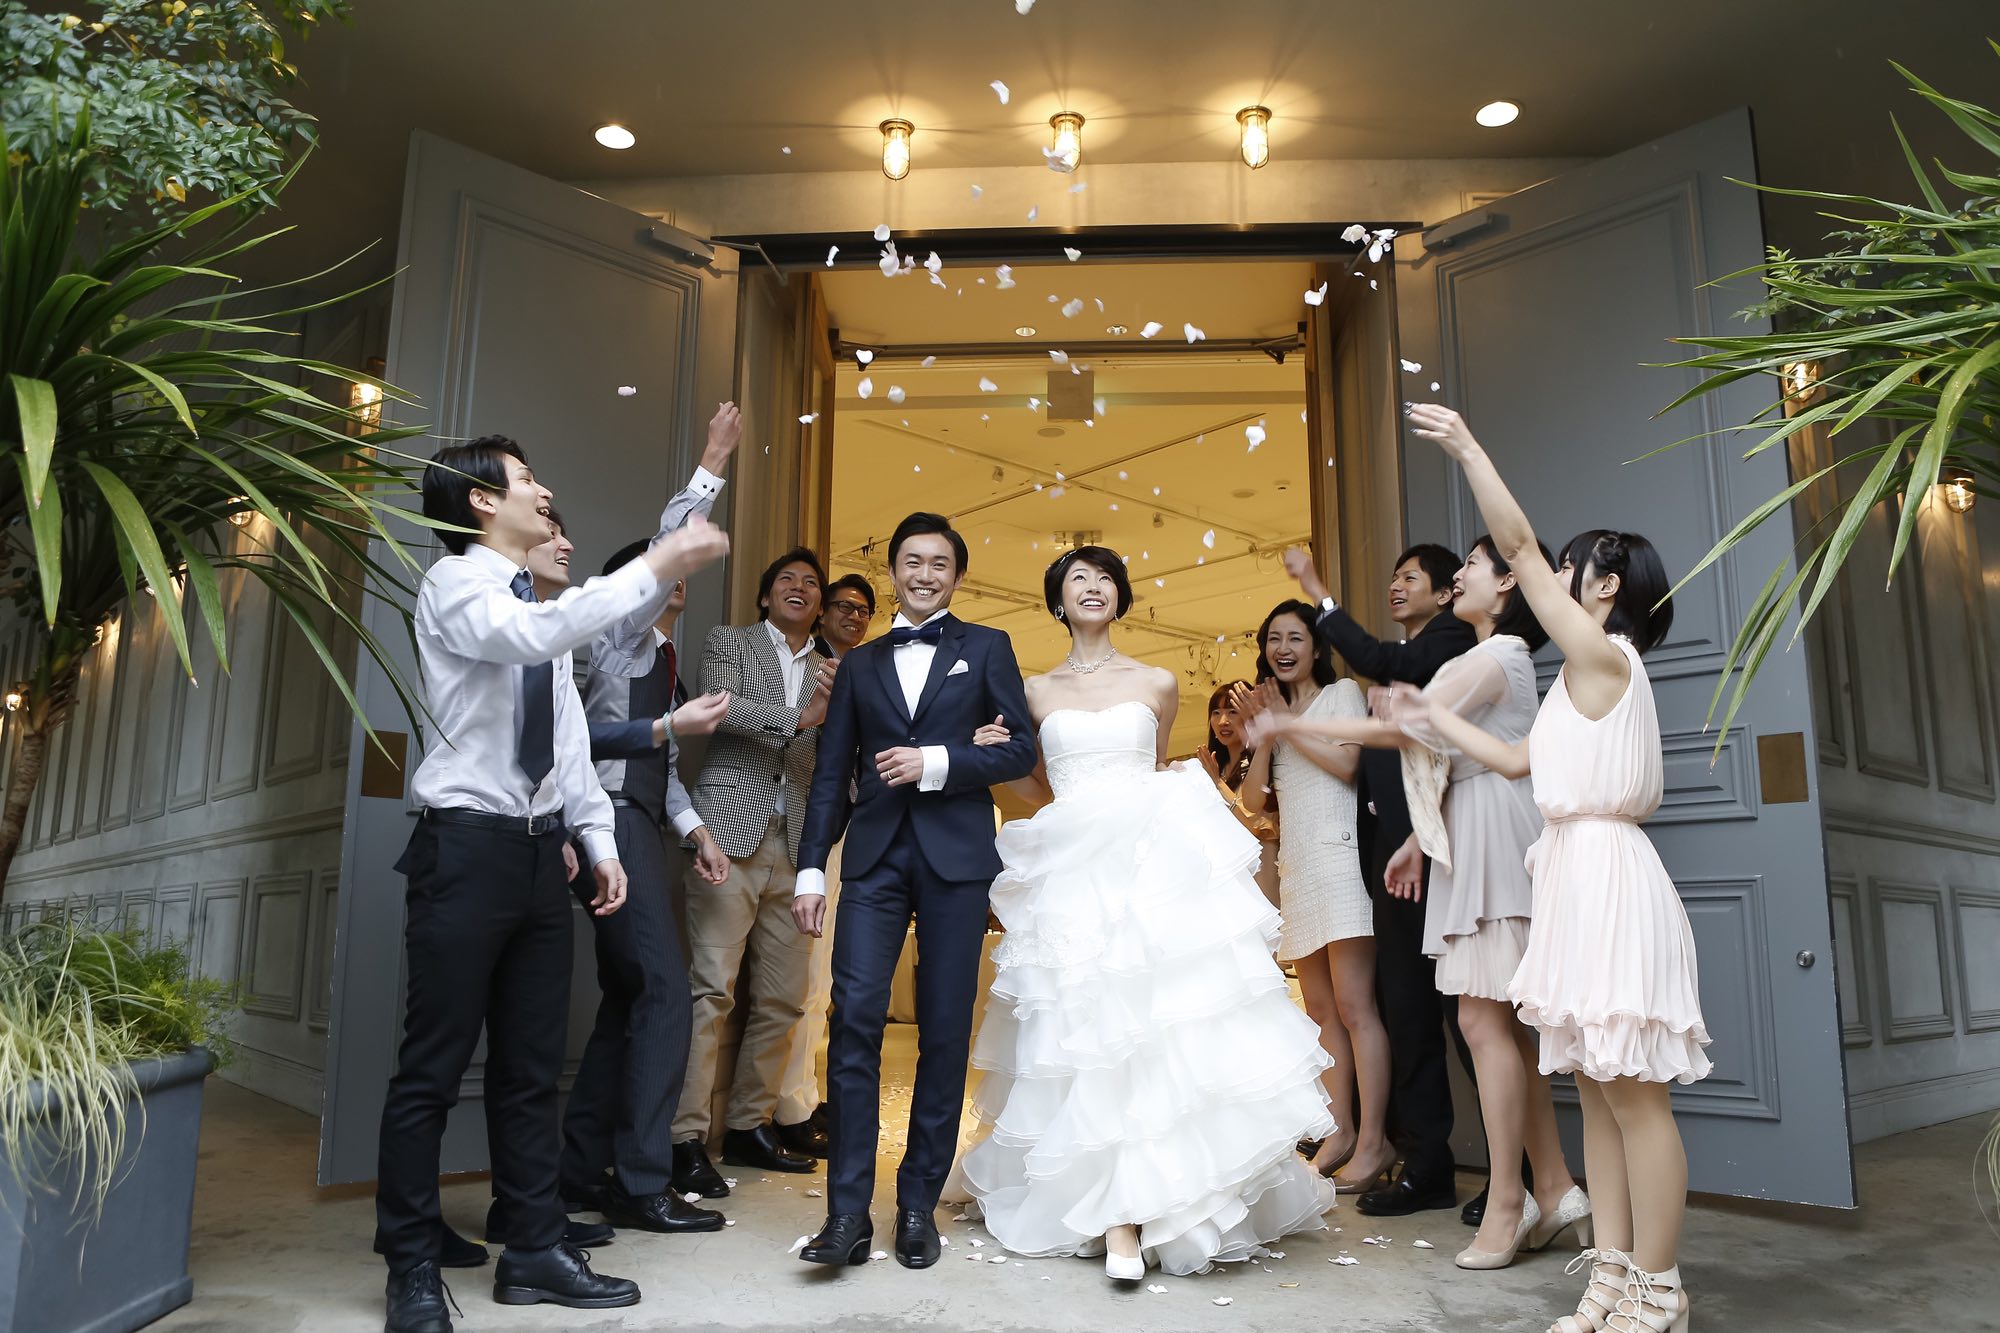 Diundang ke Pernikahan Jepang? Inilah 10 Hal yang Perlu Anda Tahu - tsunagu  Local